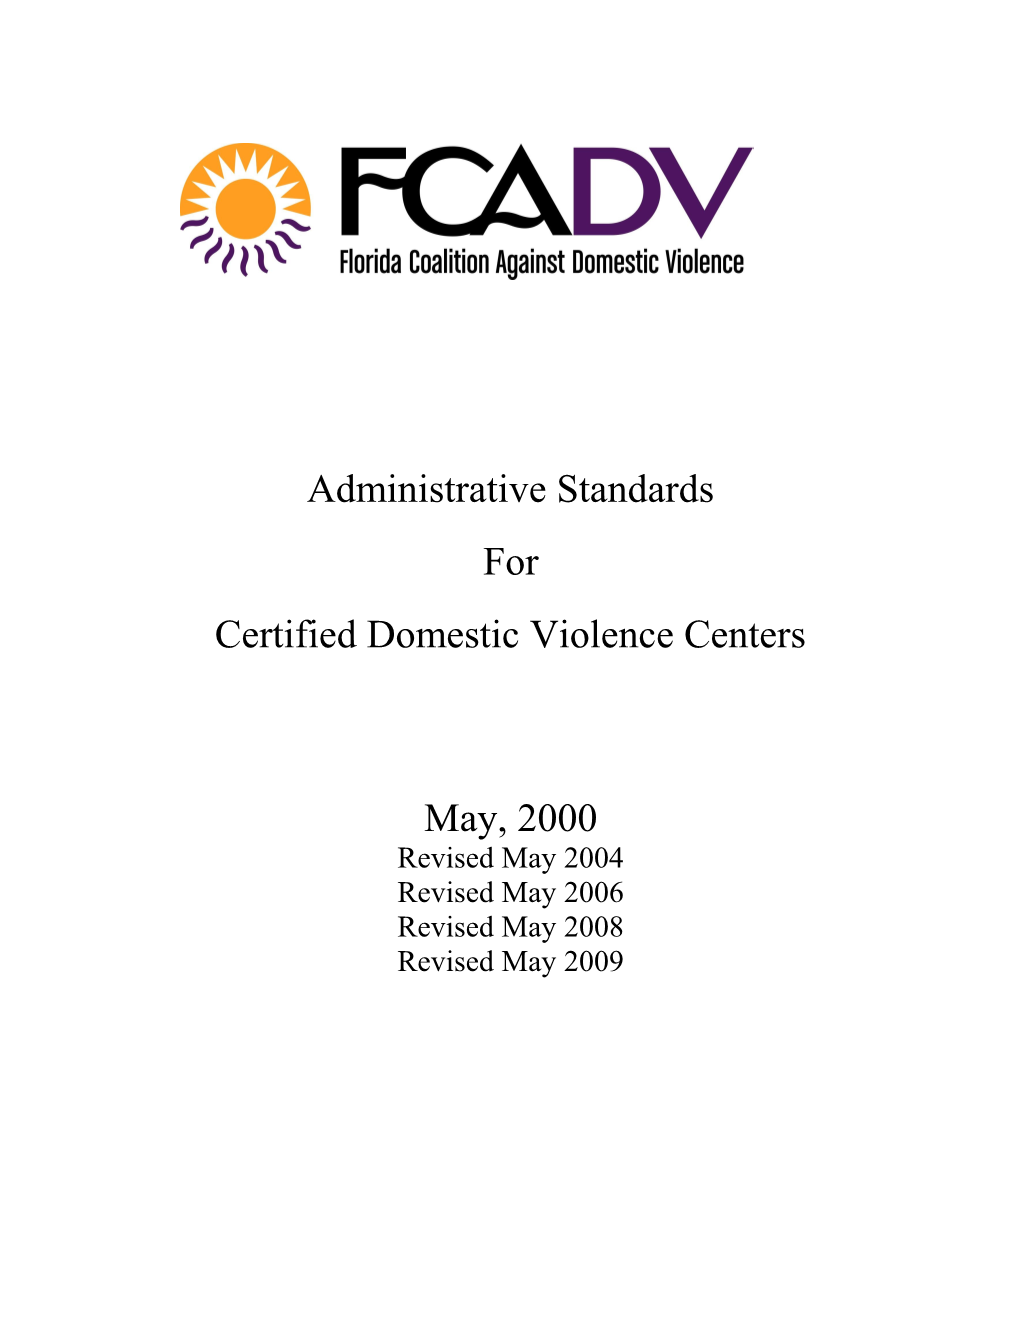 Florida Coalition Against Domestic Violence